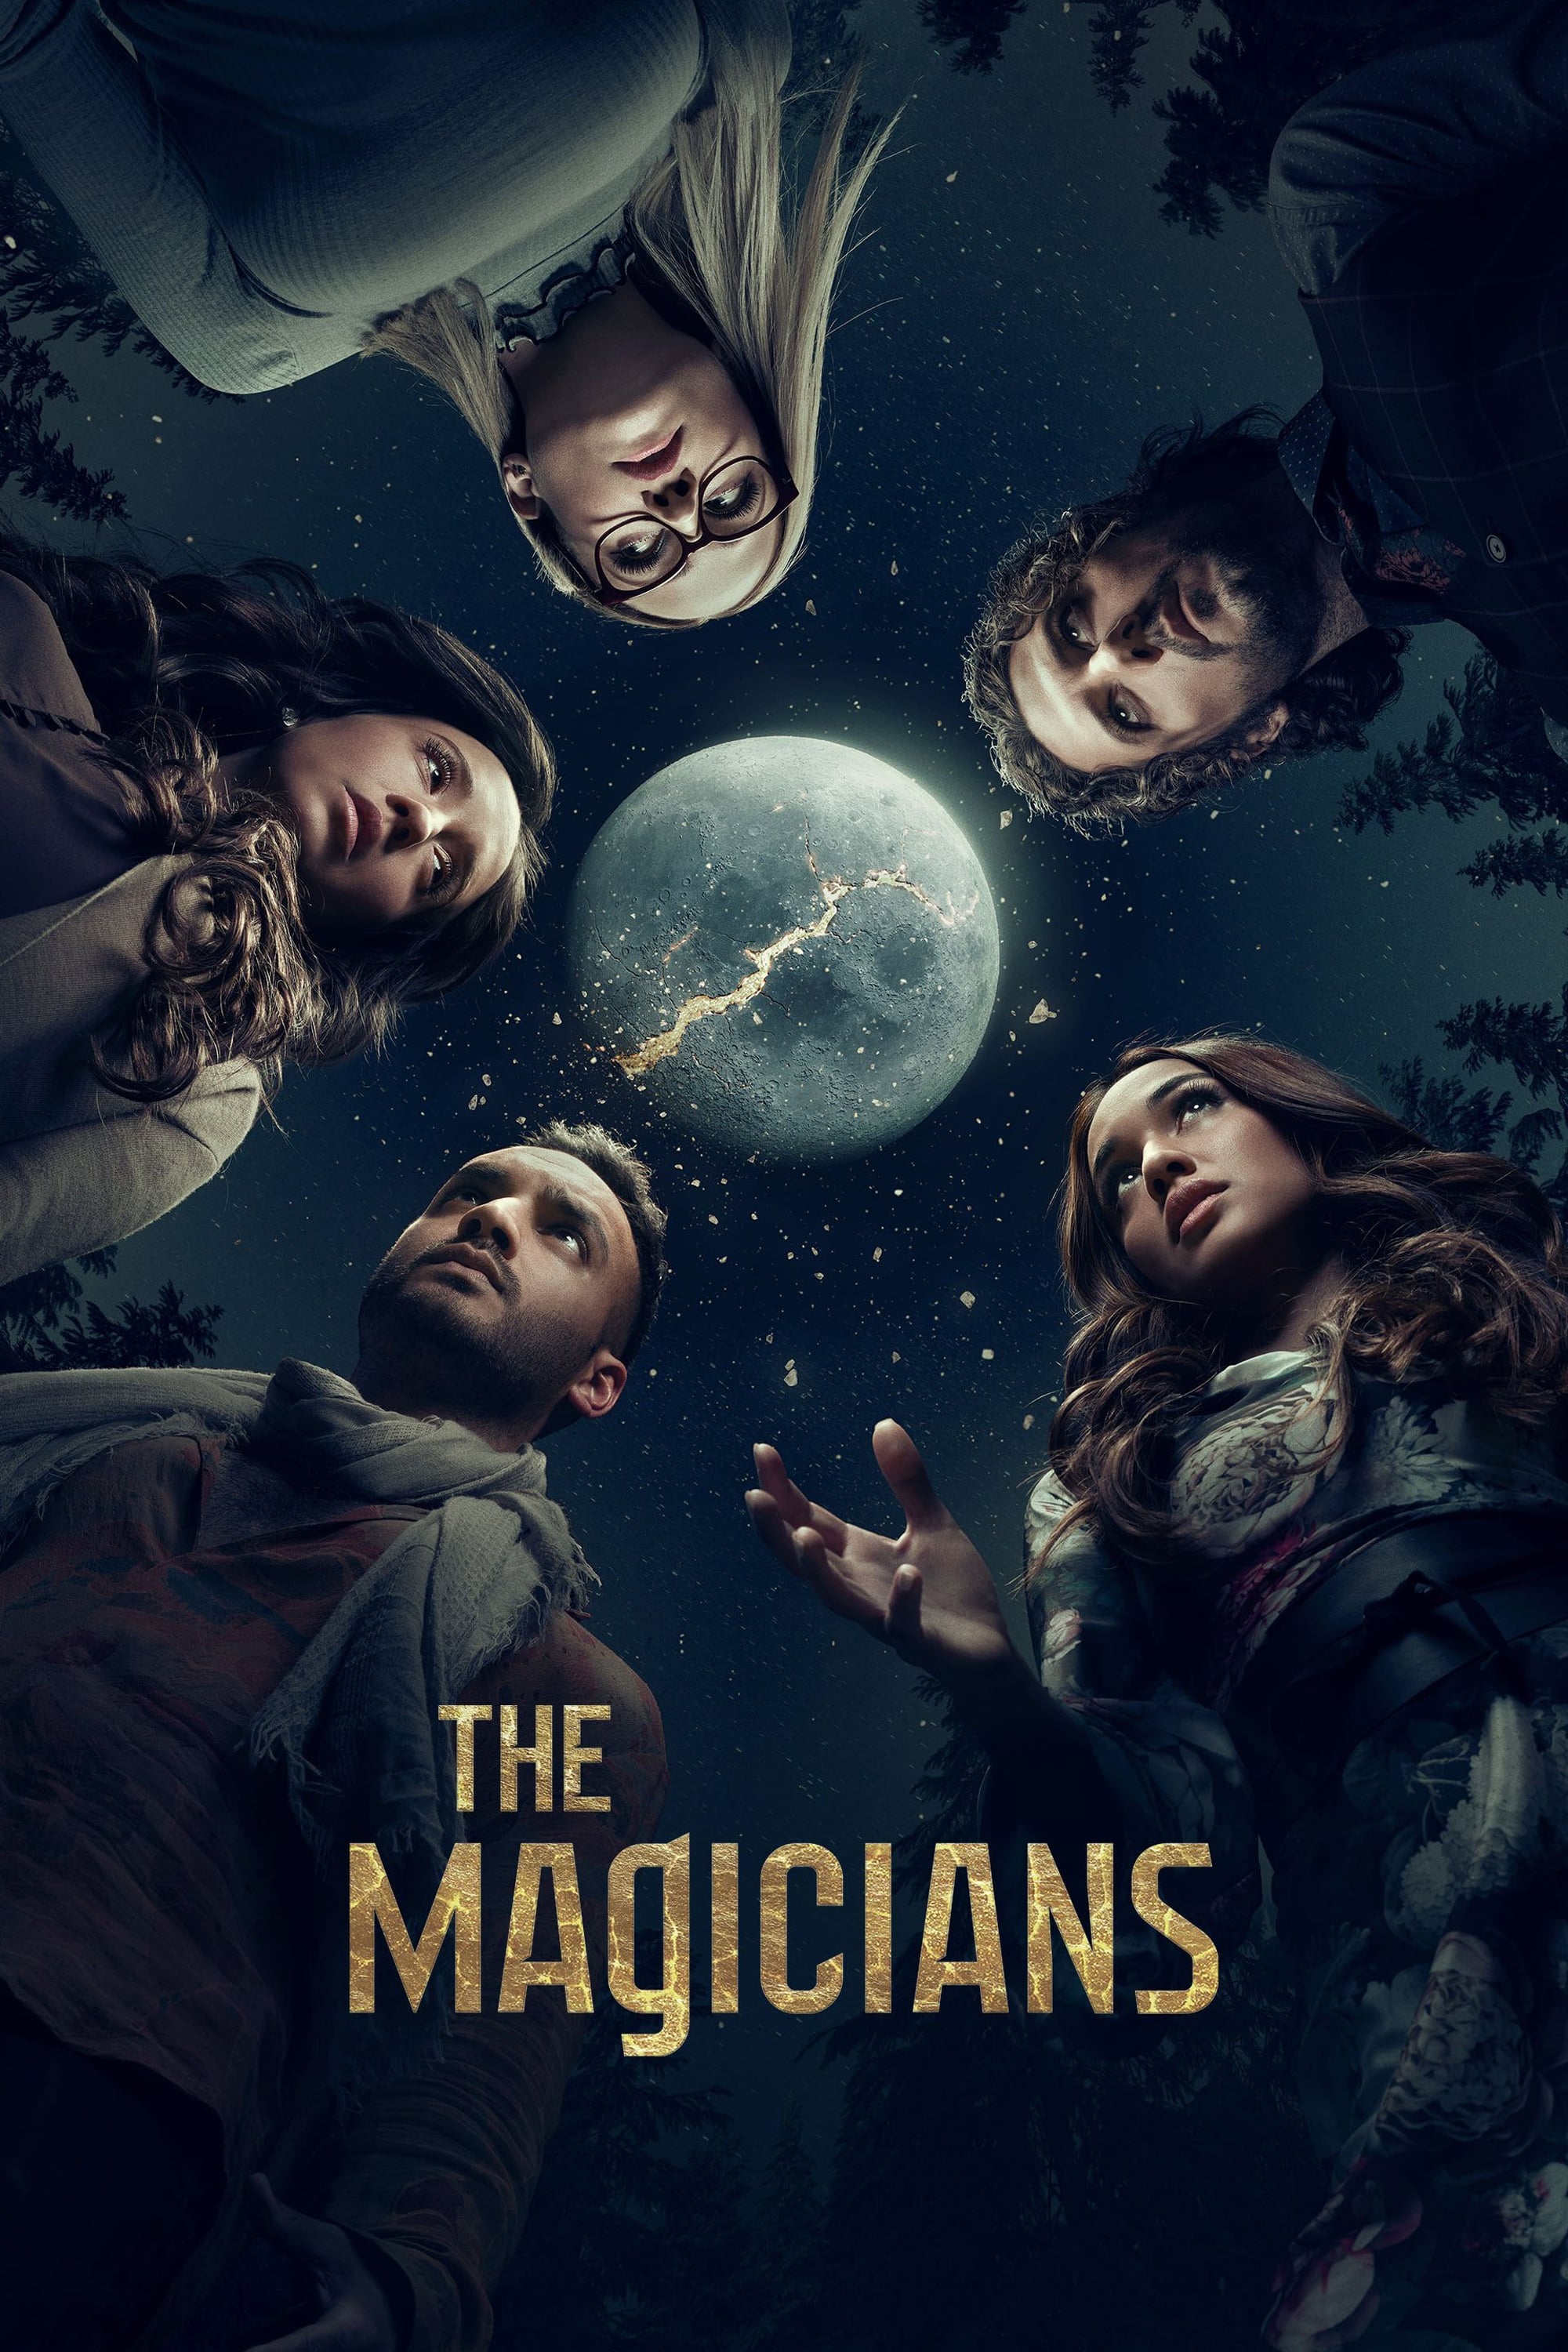 The Magicians rating